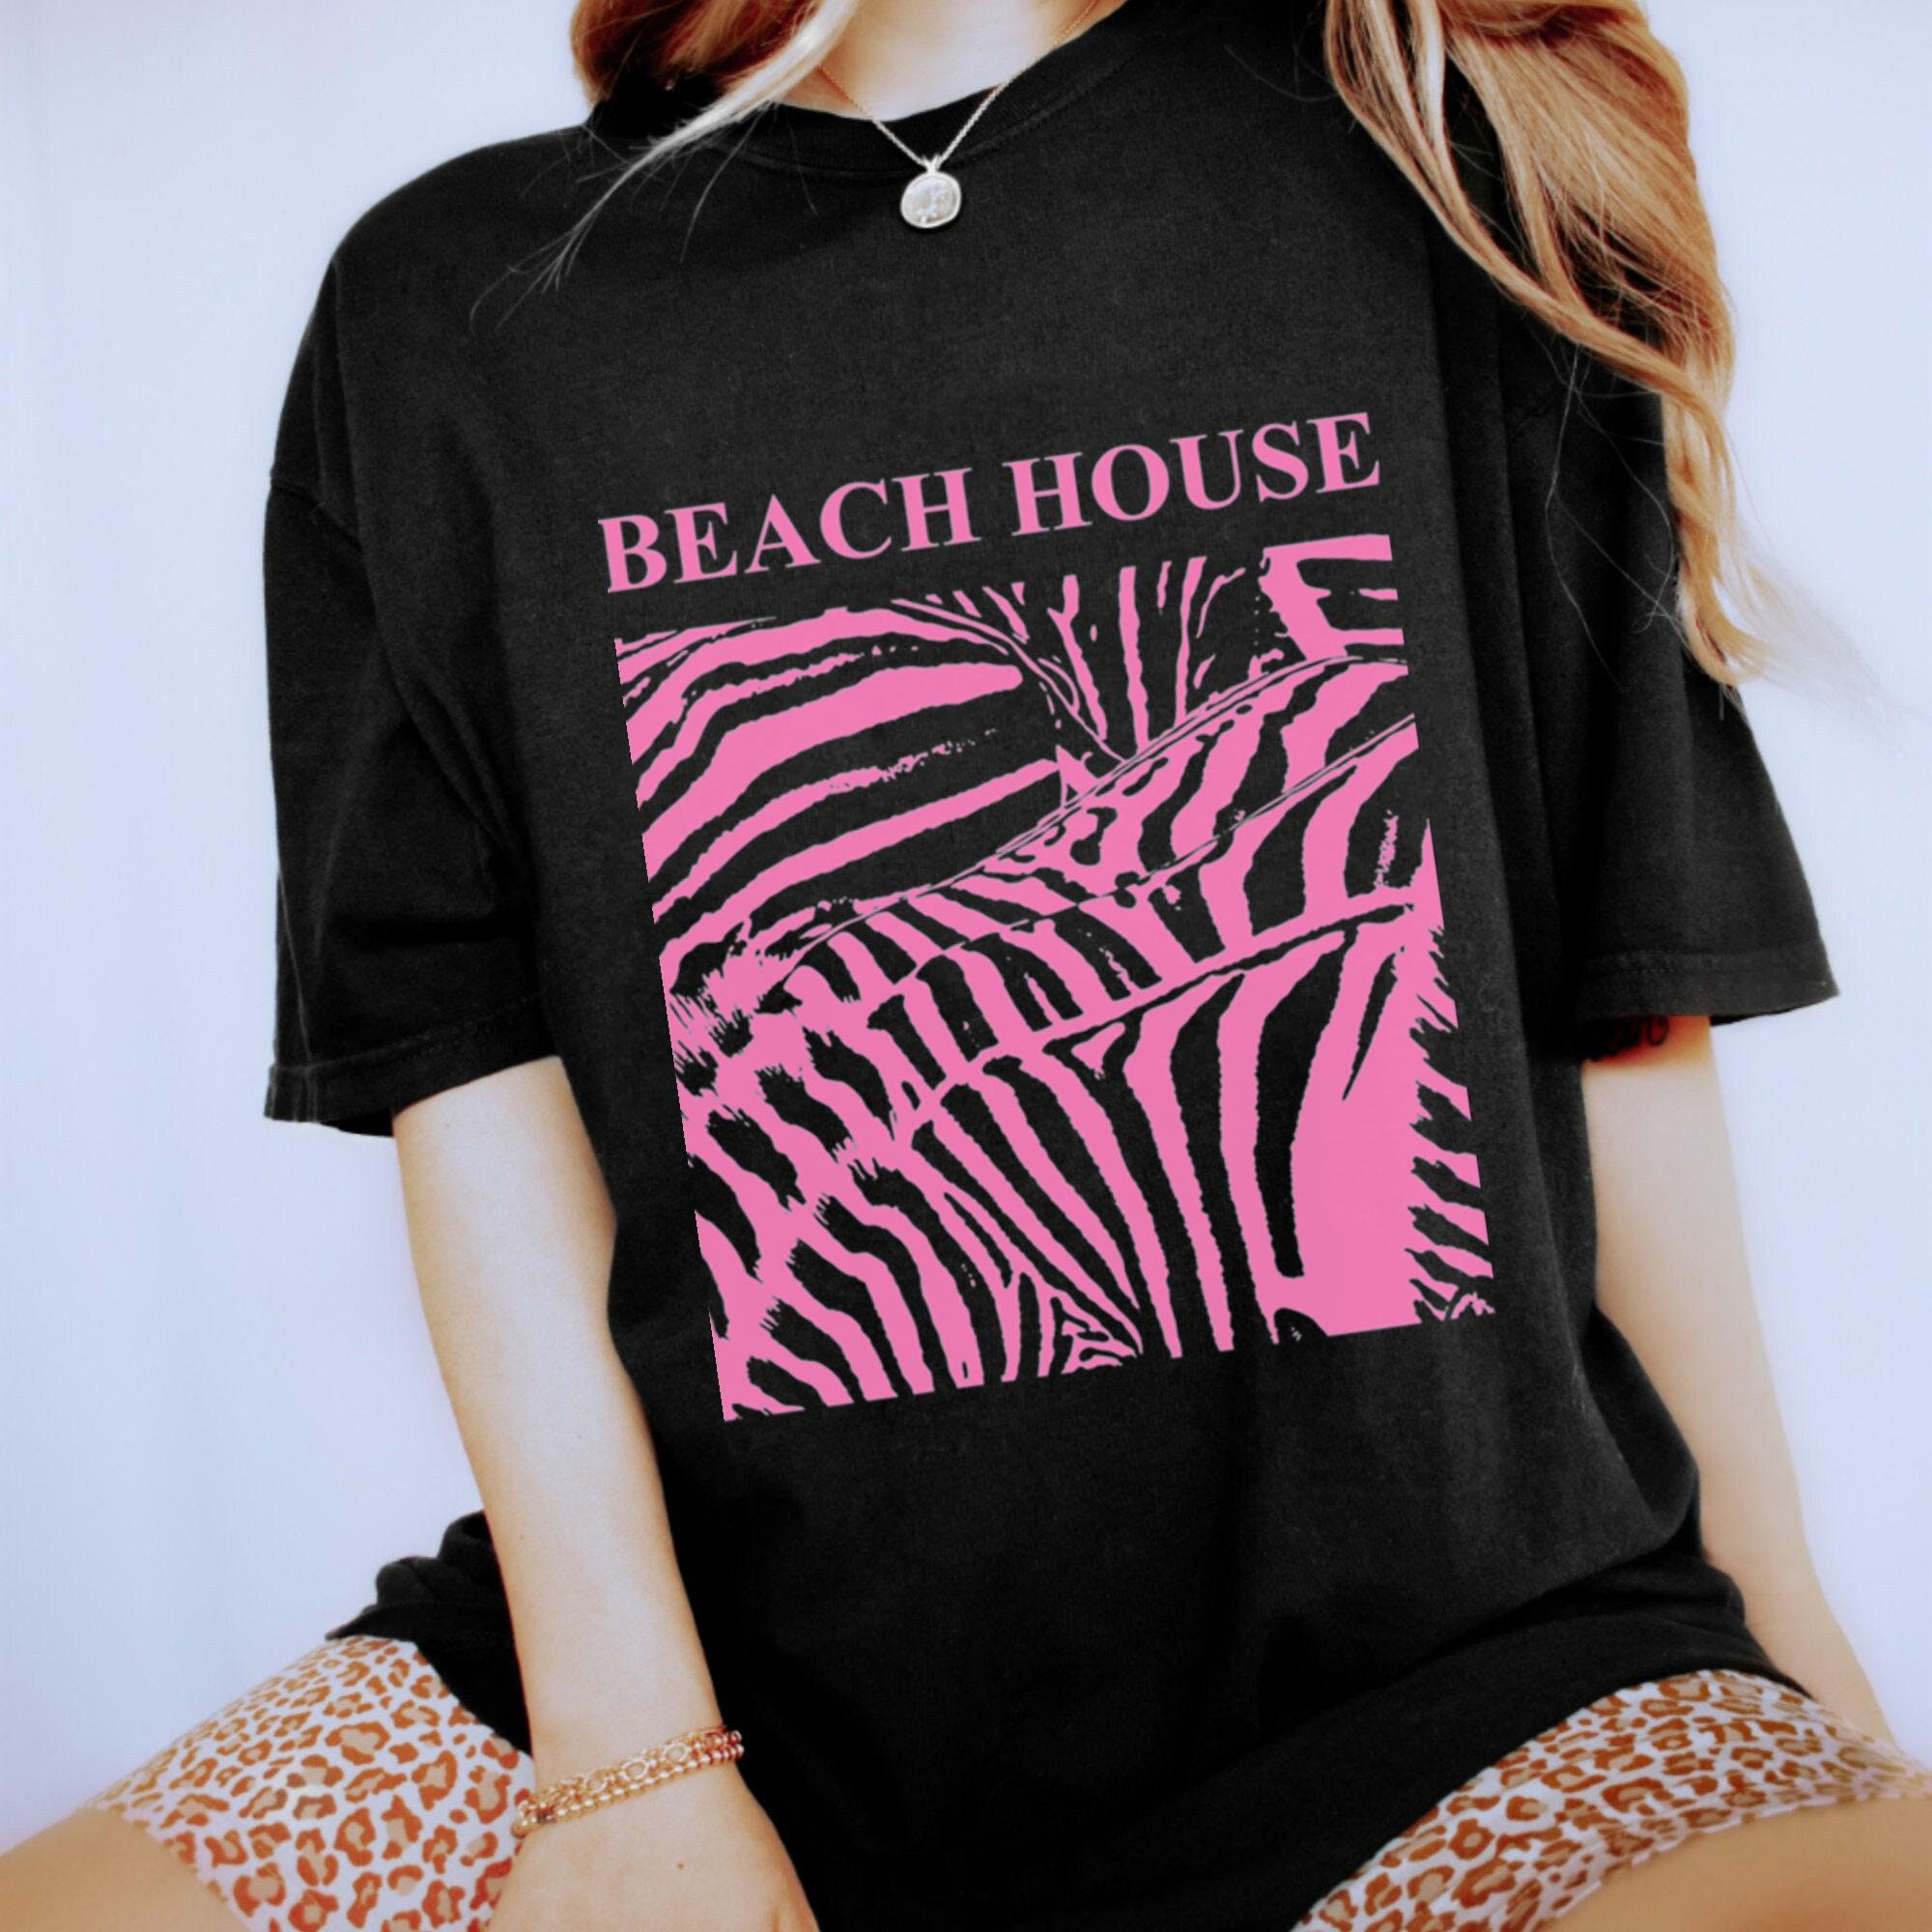 BEACH HOUSE band vintage art shirt